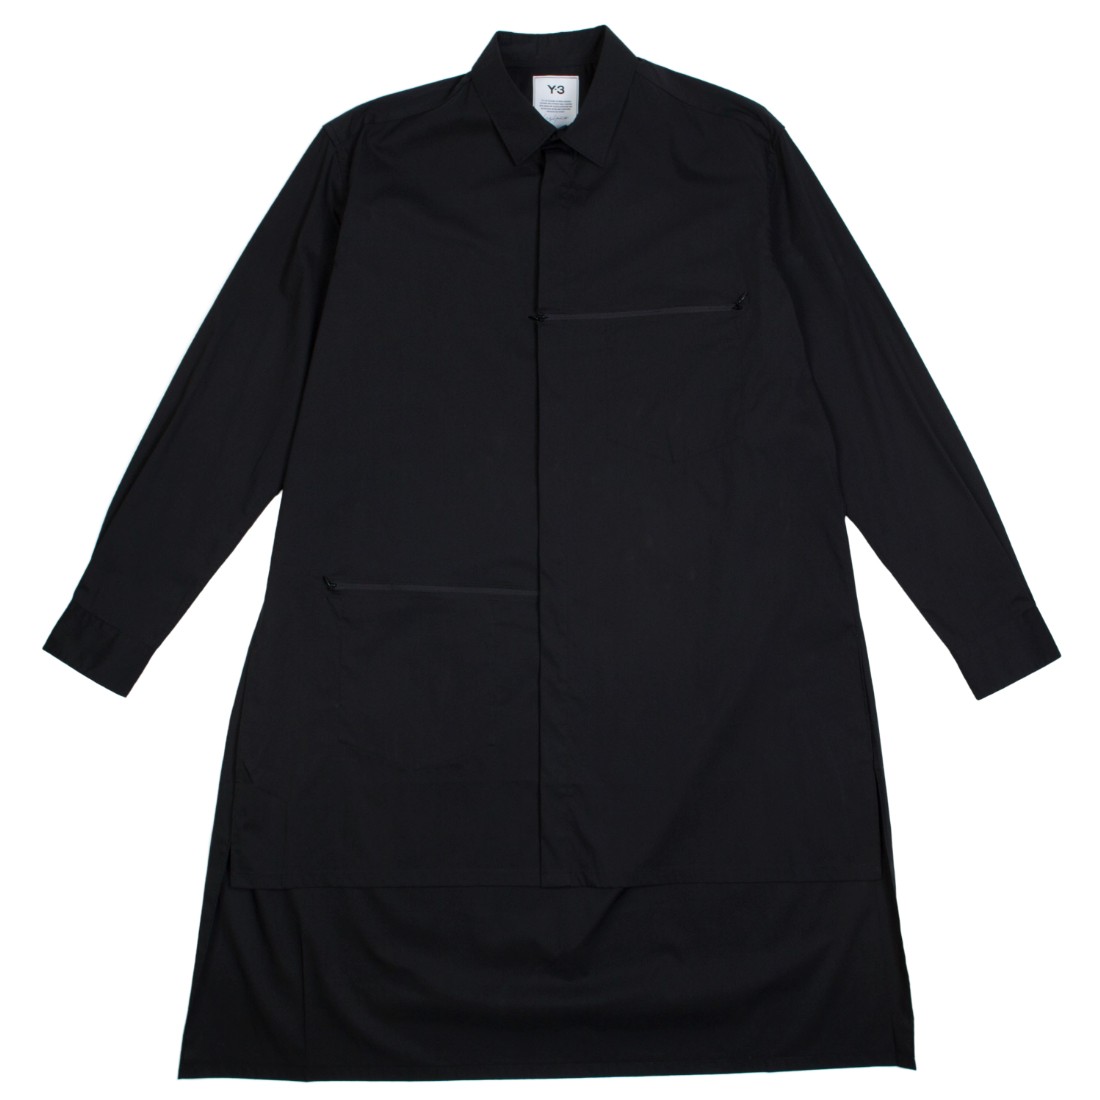 Adidas Y-3 Men Classic Long Sleeve Shirt black